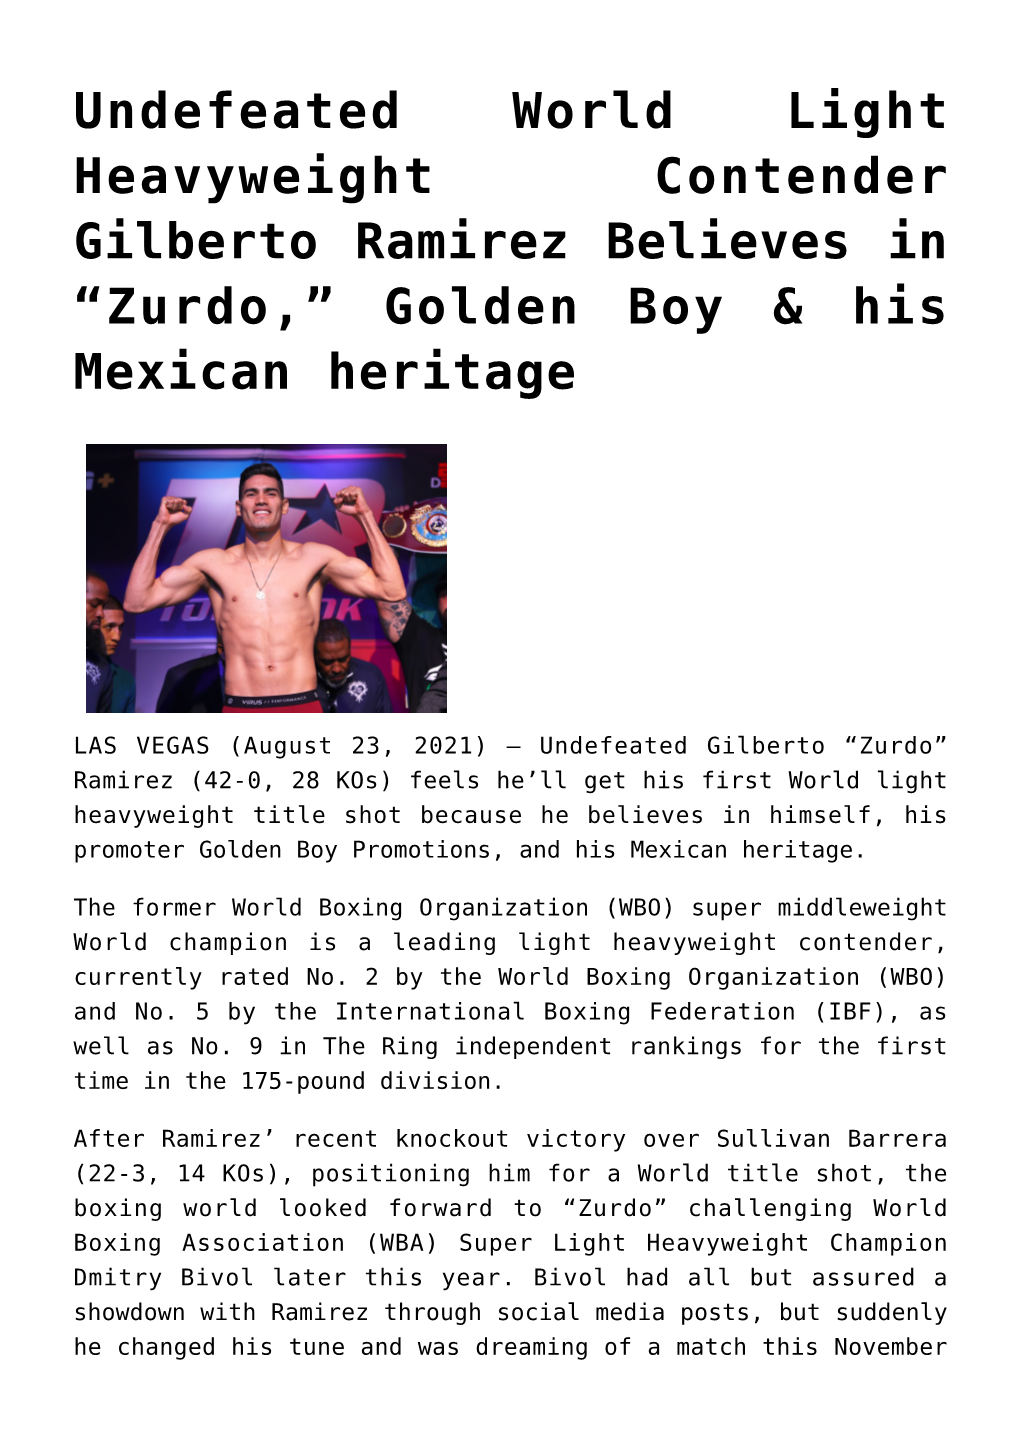 Undefeated World Light Heavyweight Contender Gilberto Ramirez Believes in “Zurdo,” Golden Boy & His Mexican Heritage